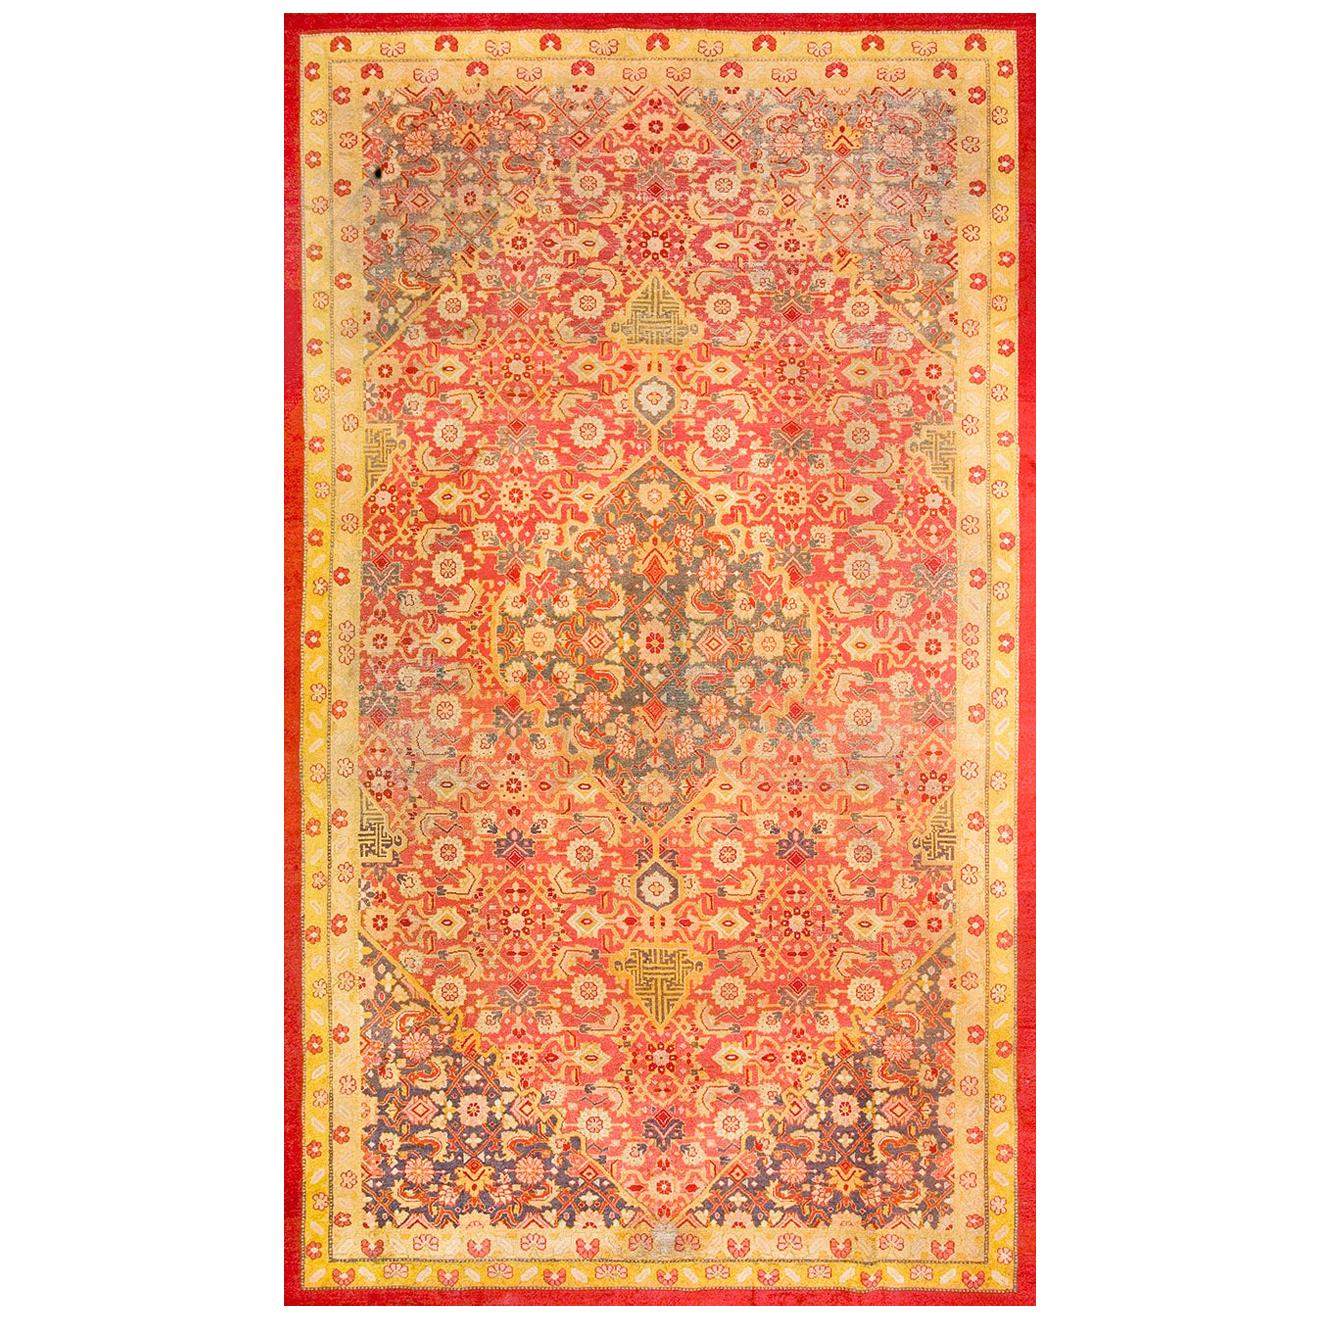 Early 20th Century N. Indian Amritsar Carpet ( 9'6" x 16'3" - 290 x 495 )